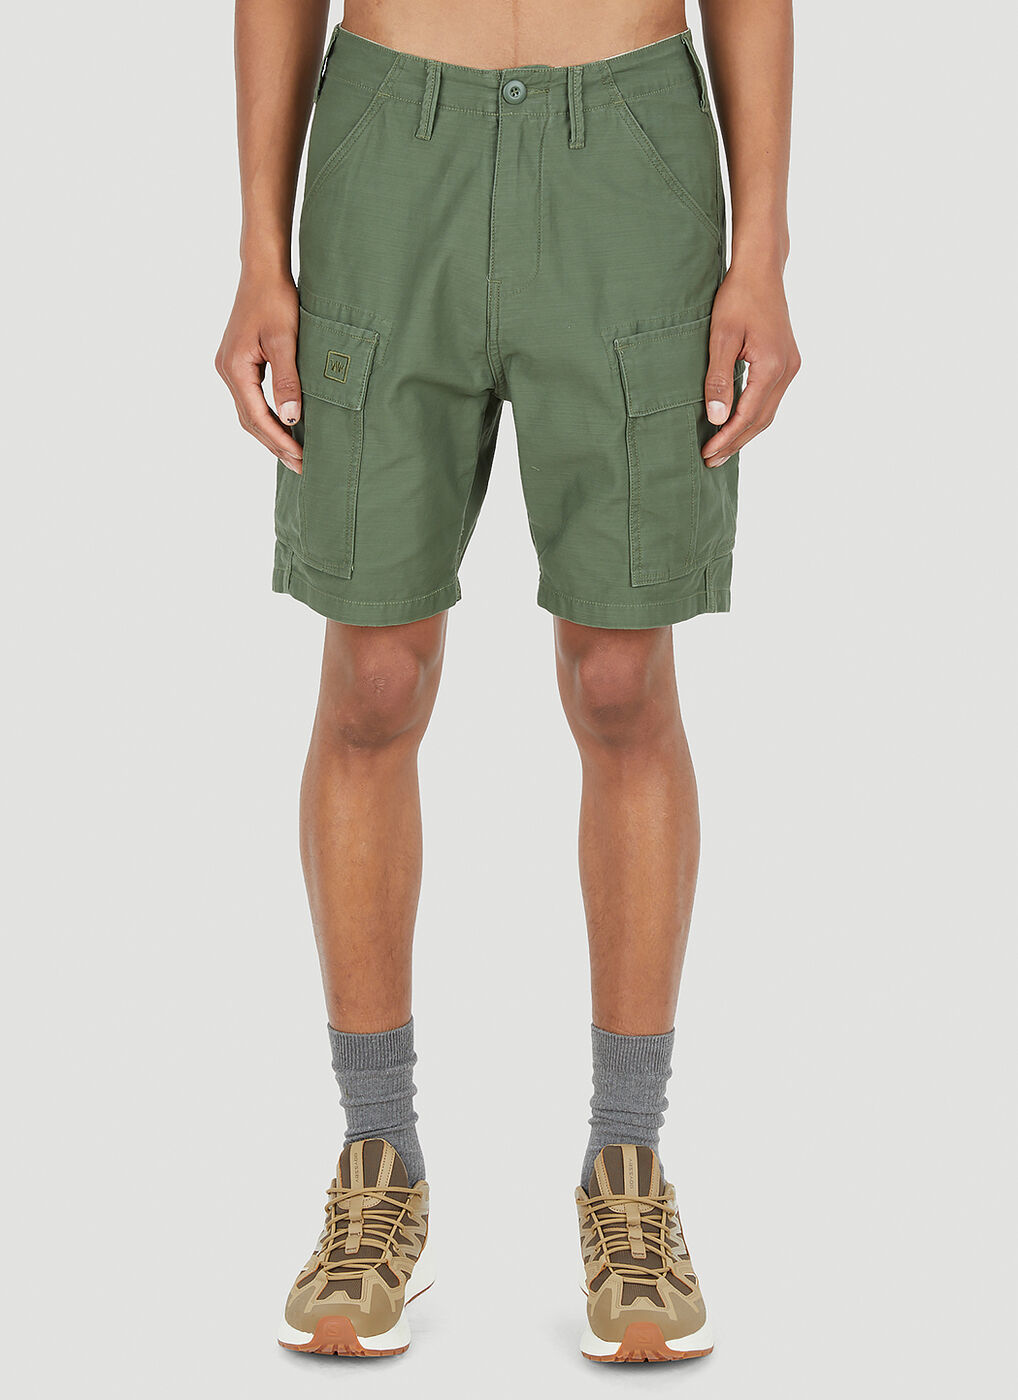 Six Pocket Army Shorts in Khaki Liberaiders